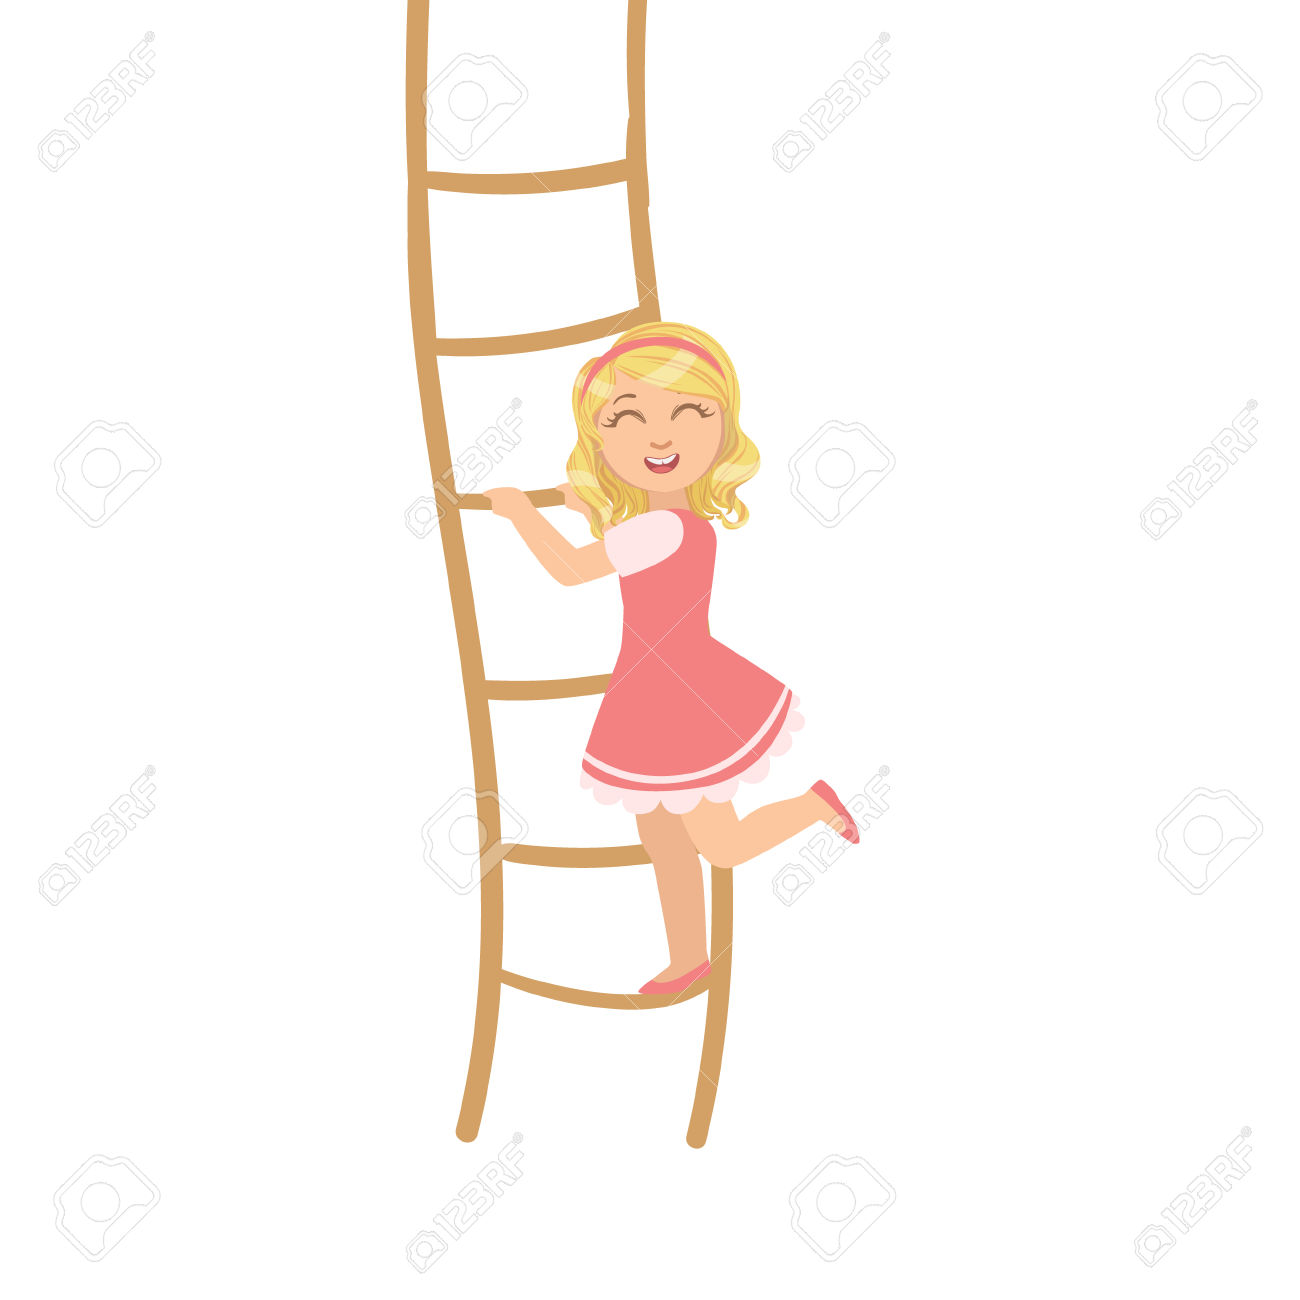 Girl In Pink Dress Climbing Rope Ladder Simple Design Illustration.